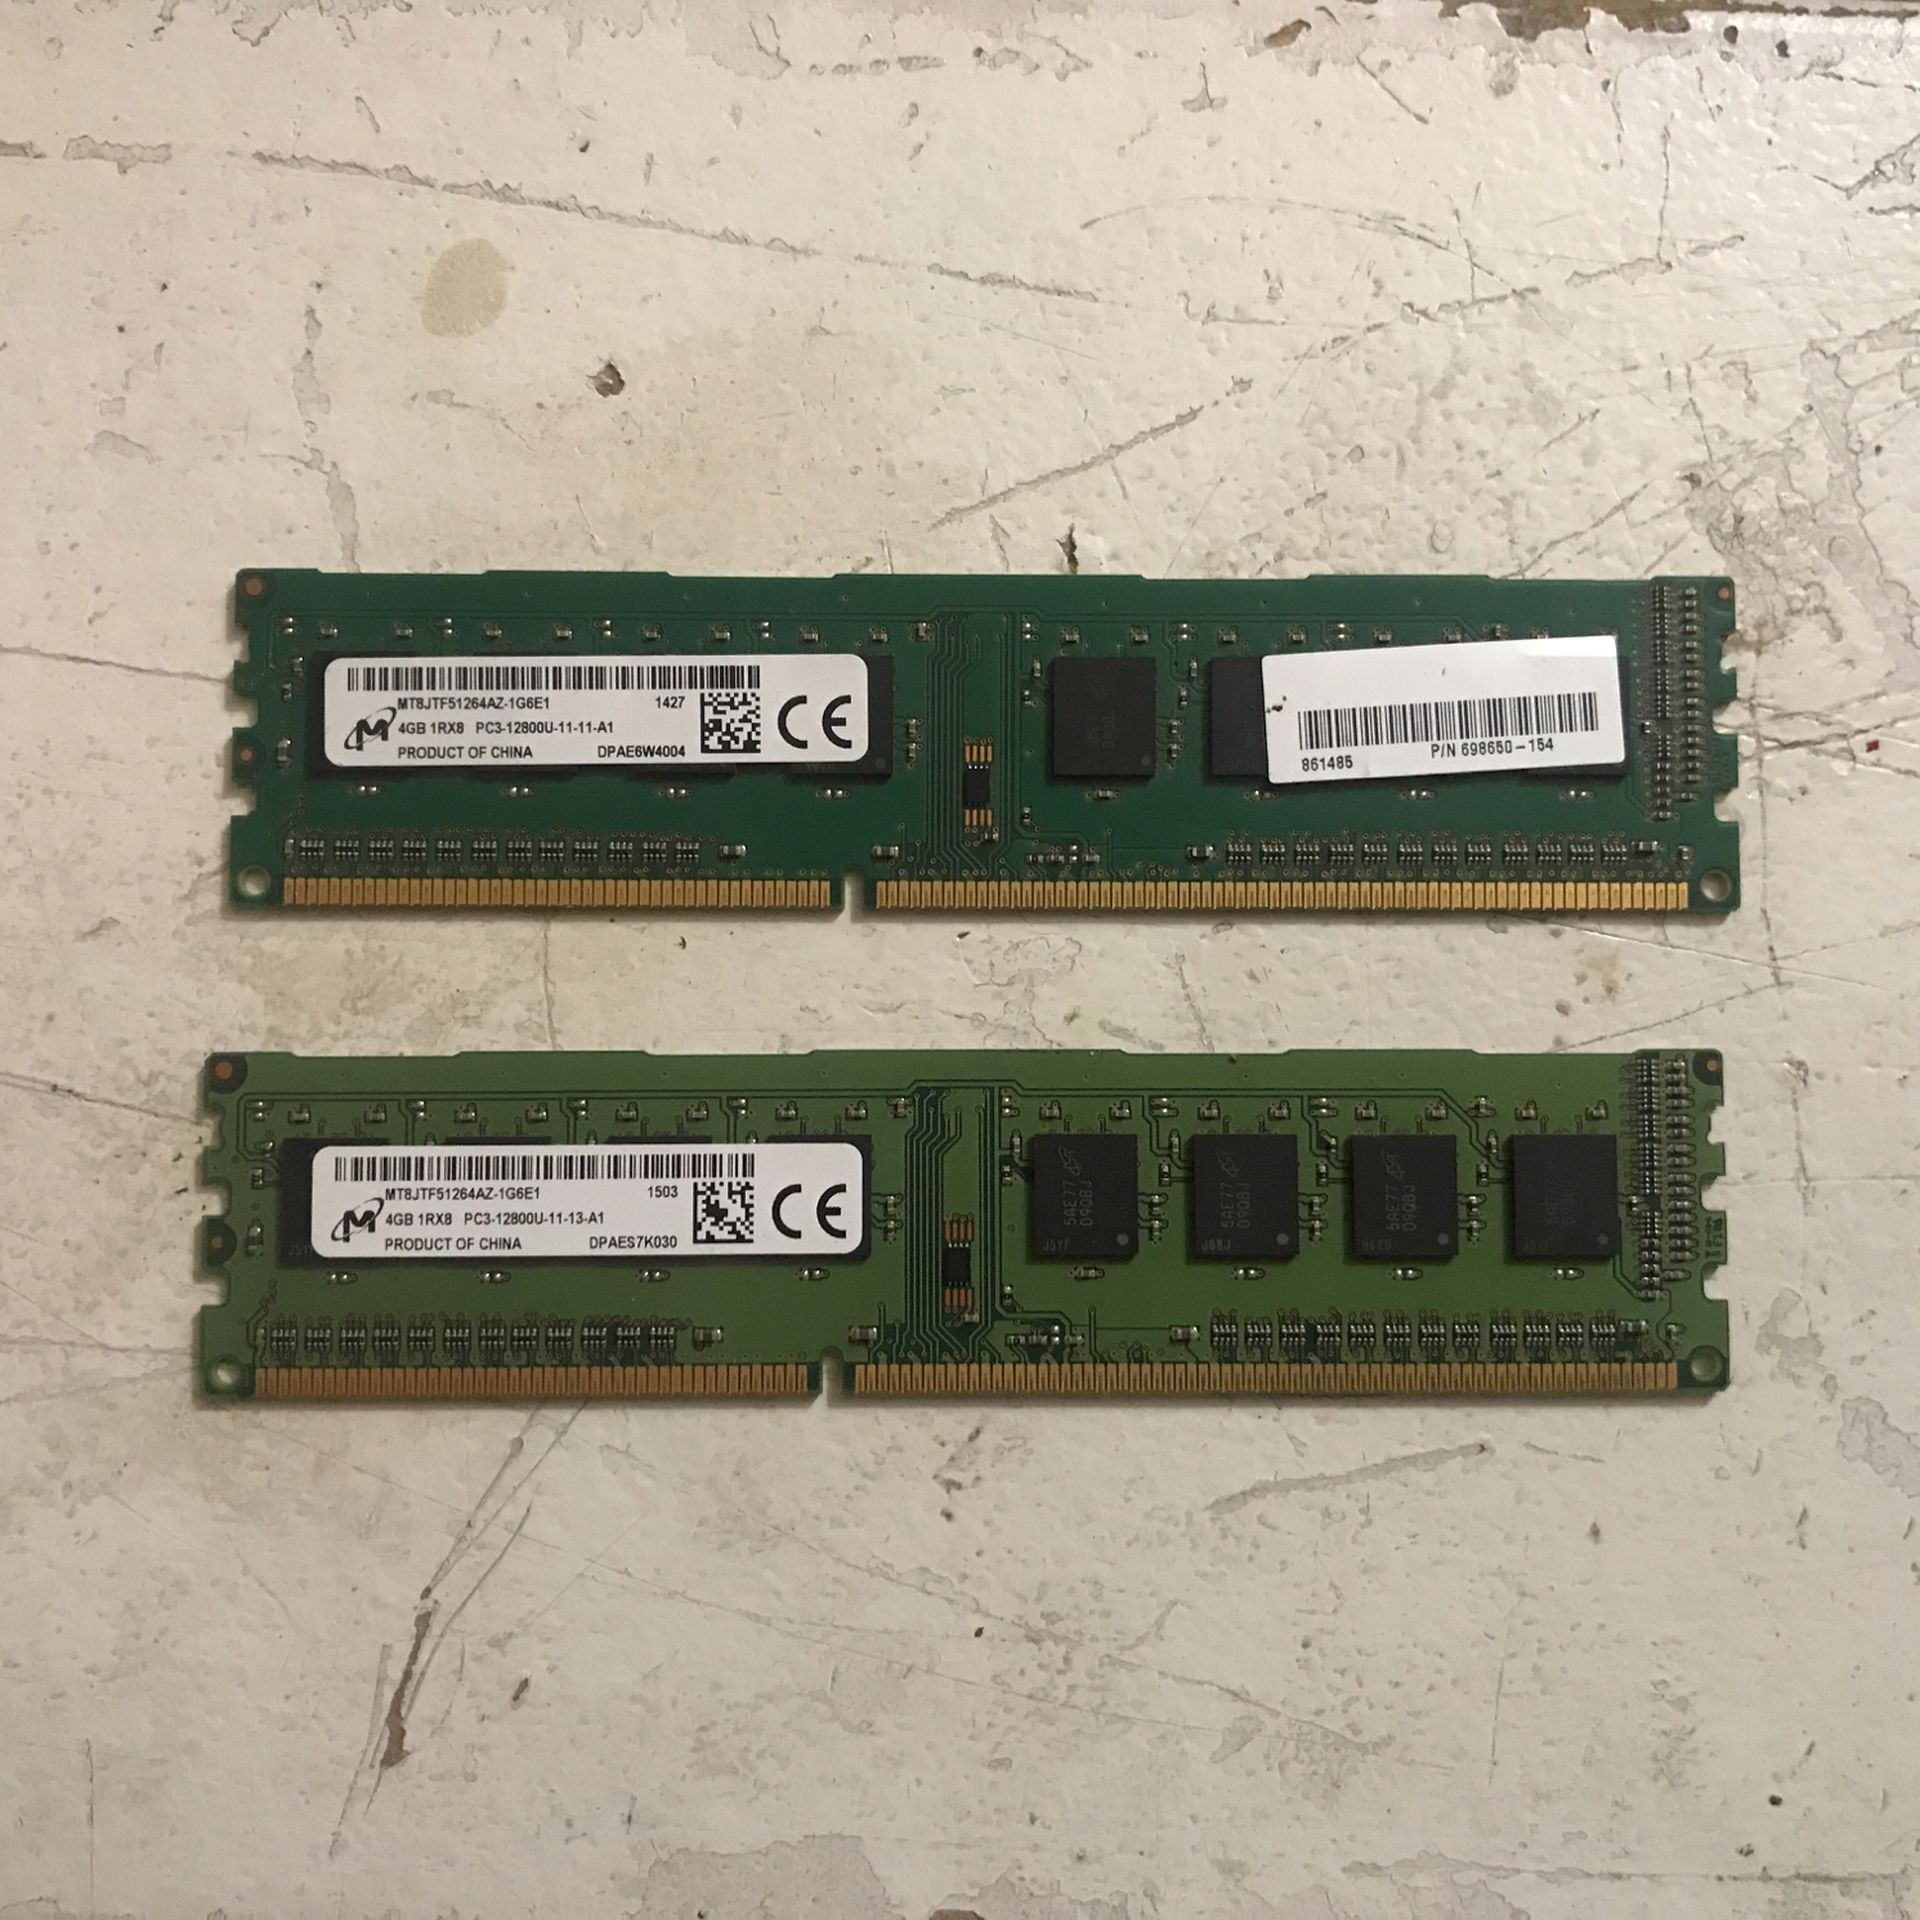 Two 4 gigabyte Of Ram Stick